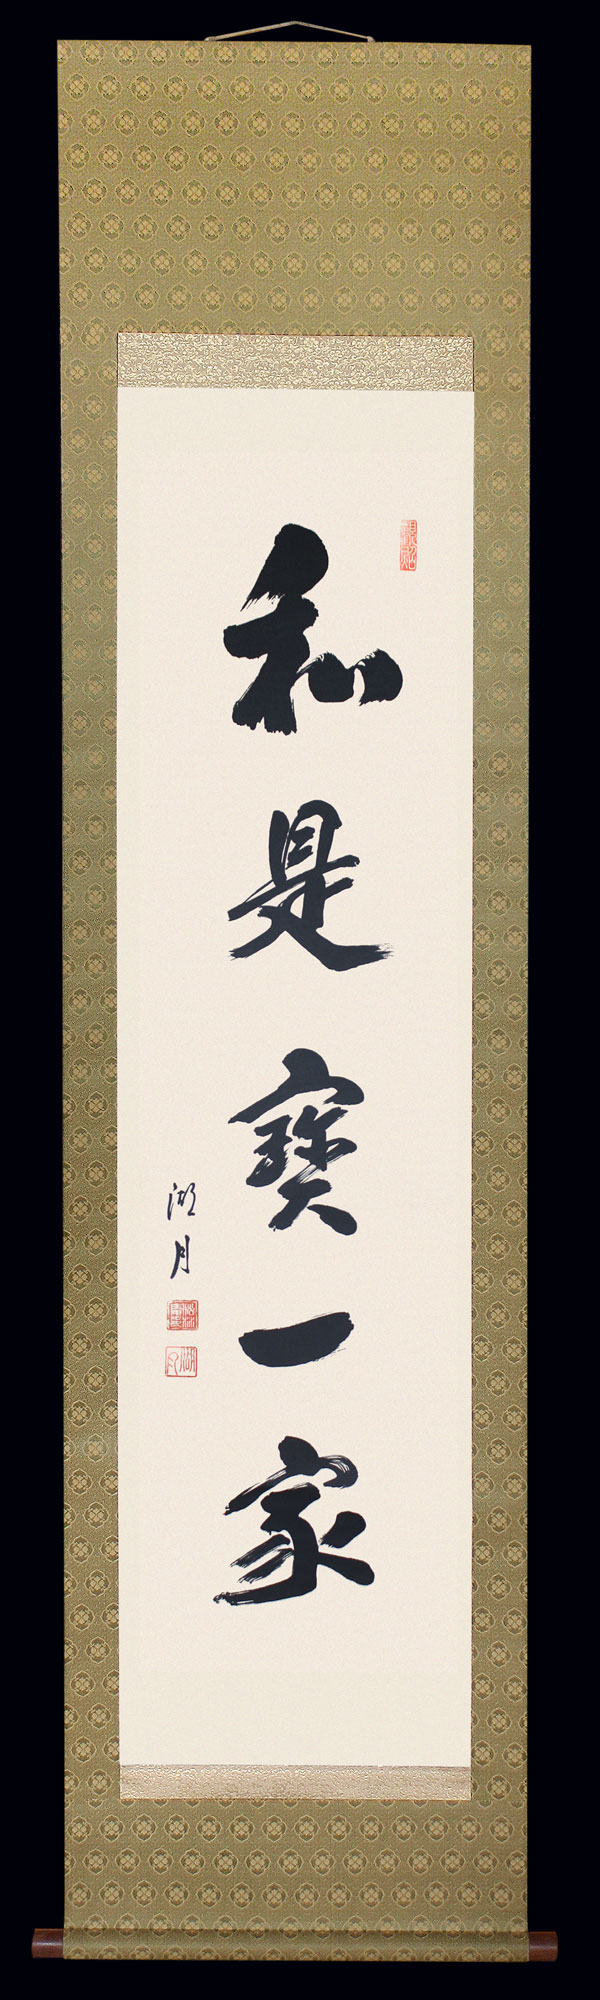 Wa-Kore-Ichikaho-Textrolle-KAK050A